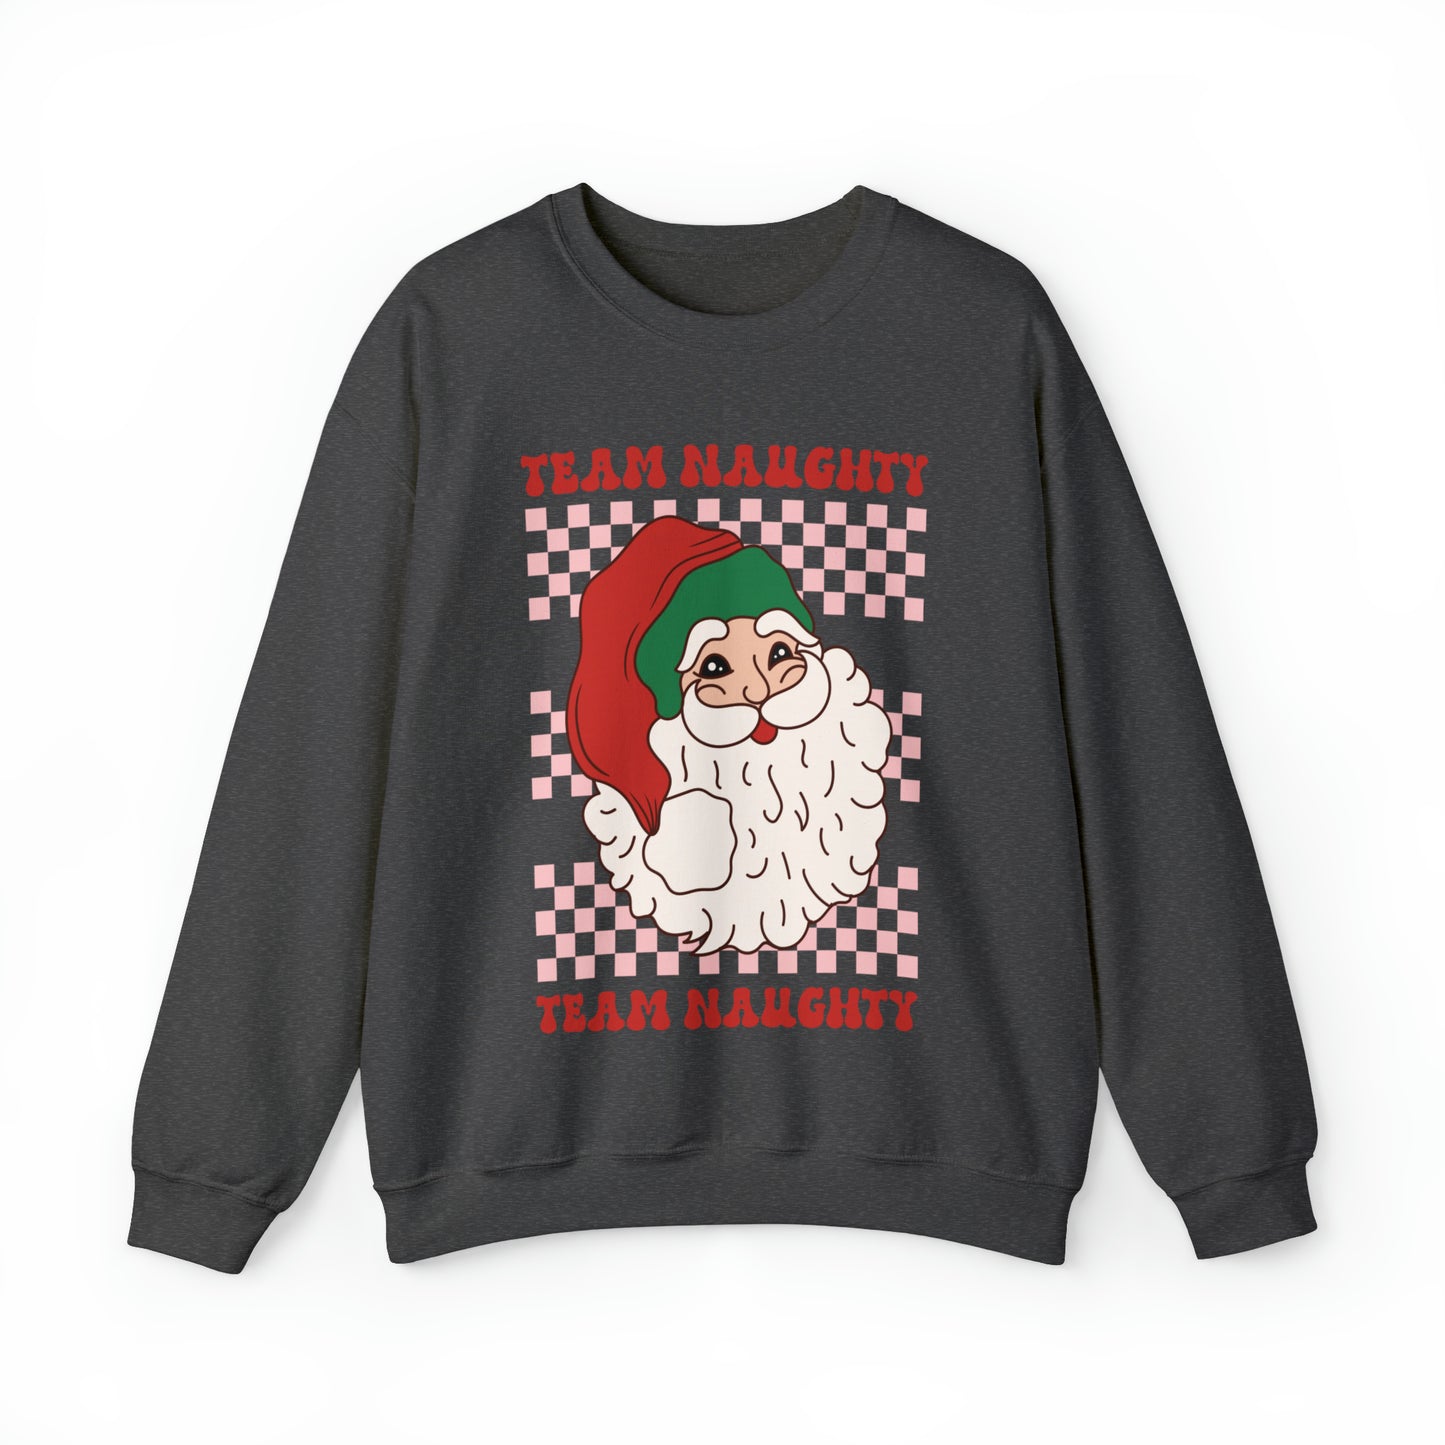 Team Naughty Women's Funny Christmas Crewneck Sweatshirt